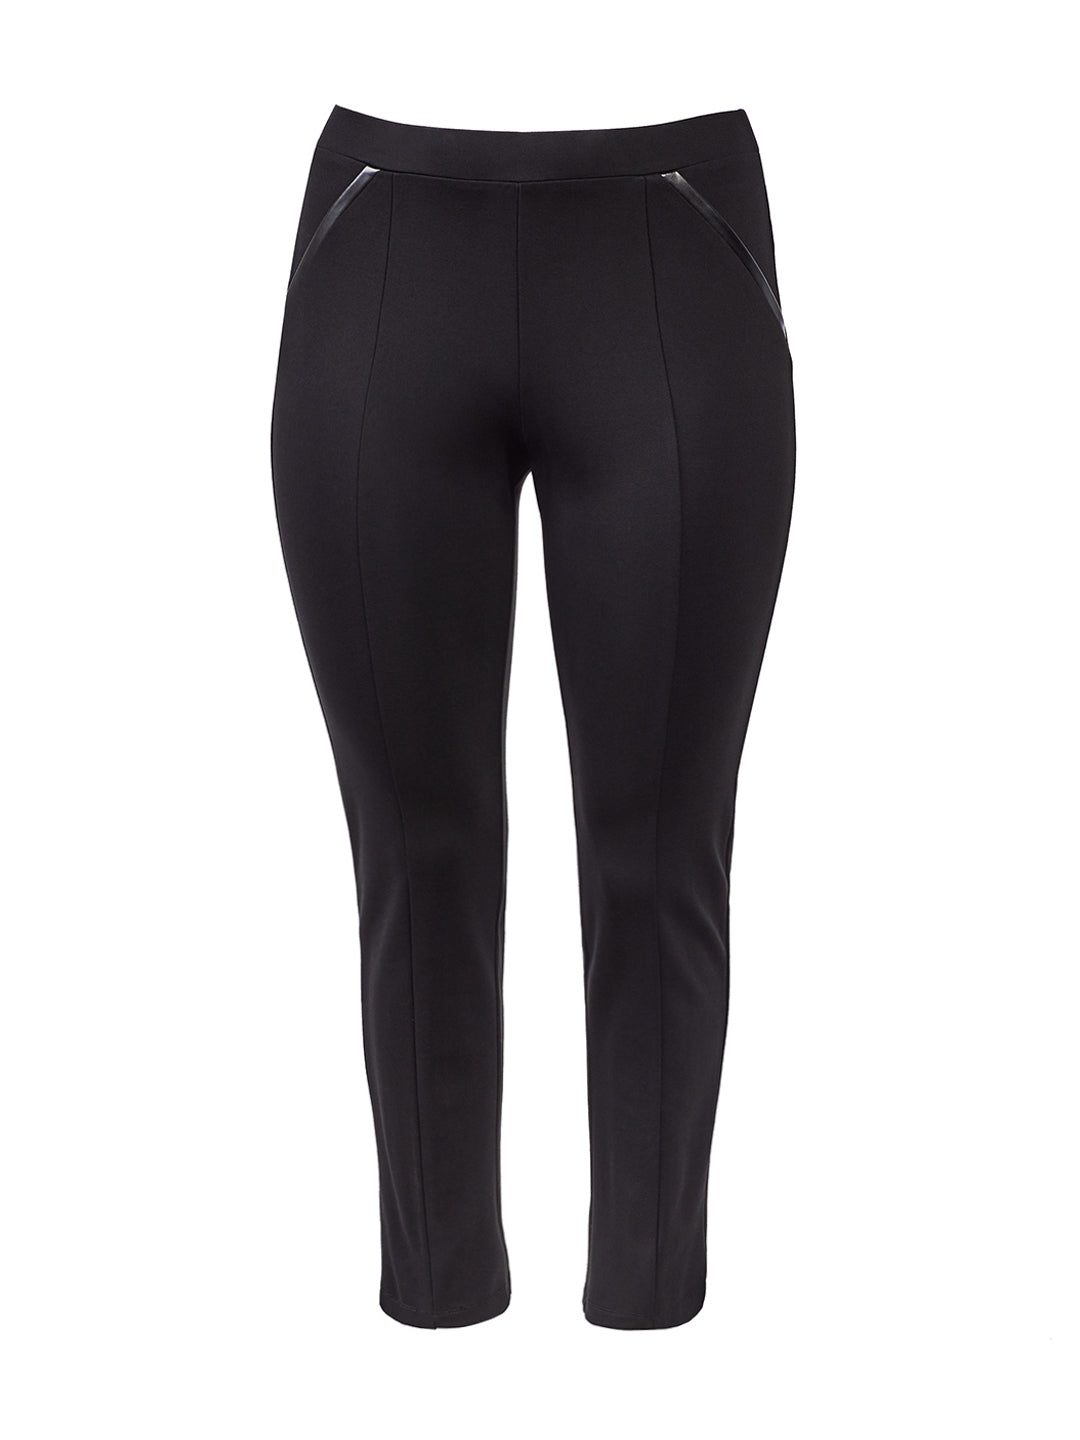 Rafaella Women's Slim Comfort Fit Ponte Dress Pants (Sizes 4-16